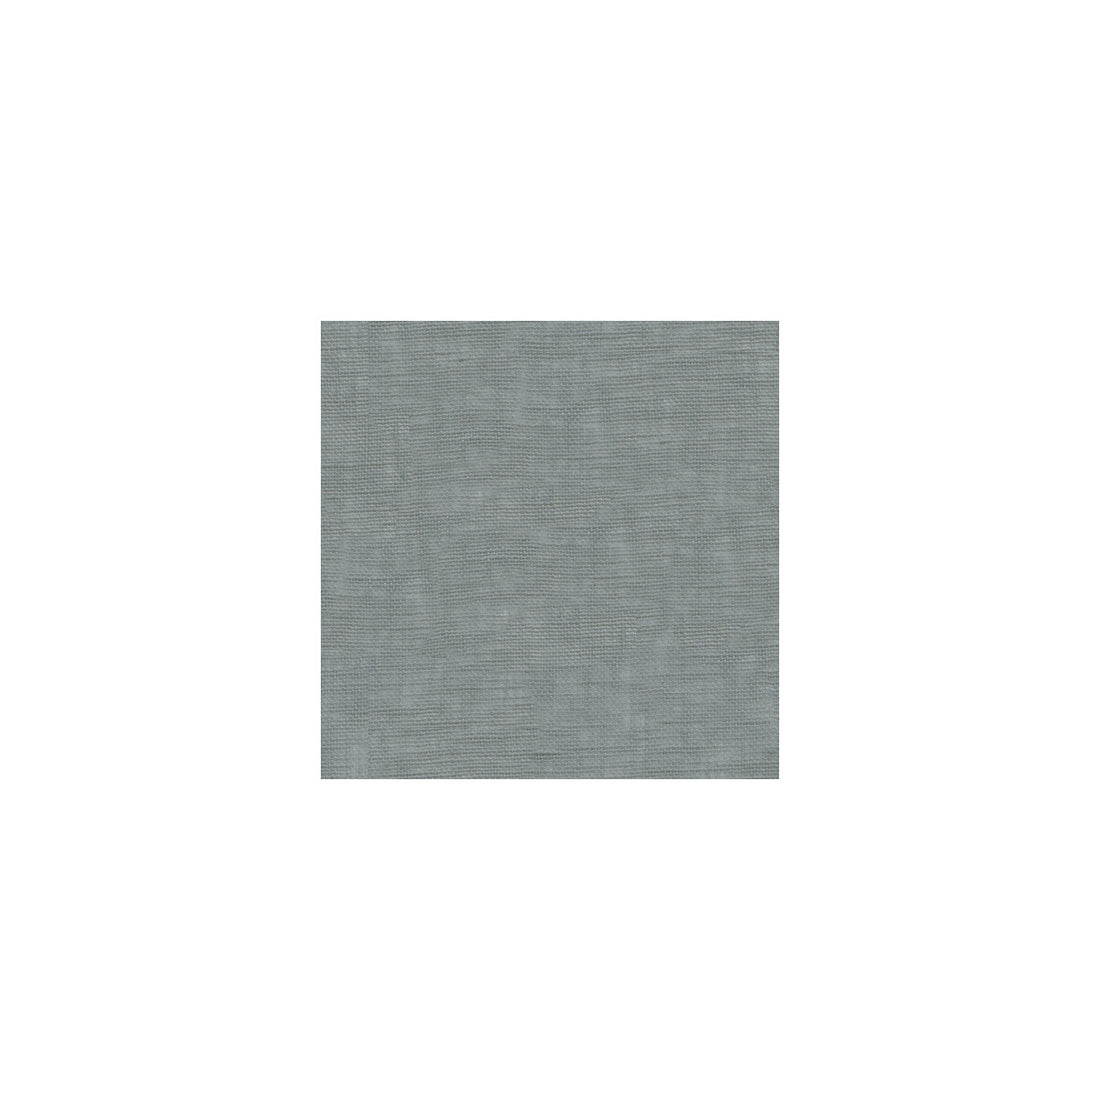 Barra fabric in eau de nil color - pattern PF50226.720.0 - by Baker Lifestyle